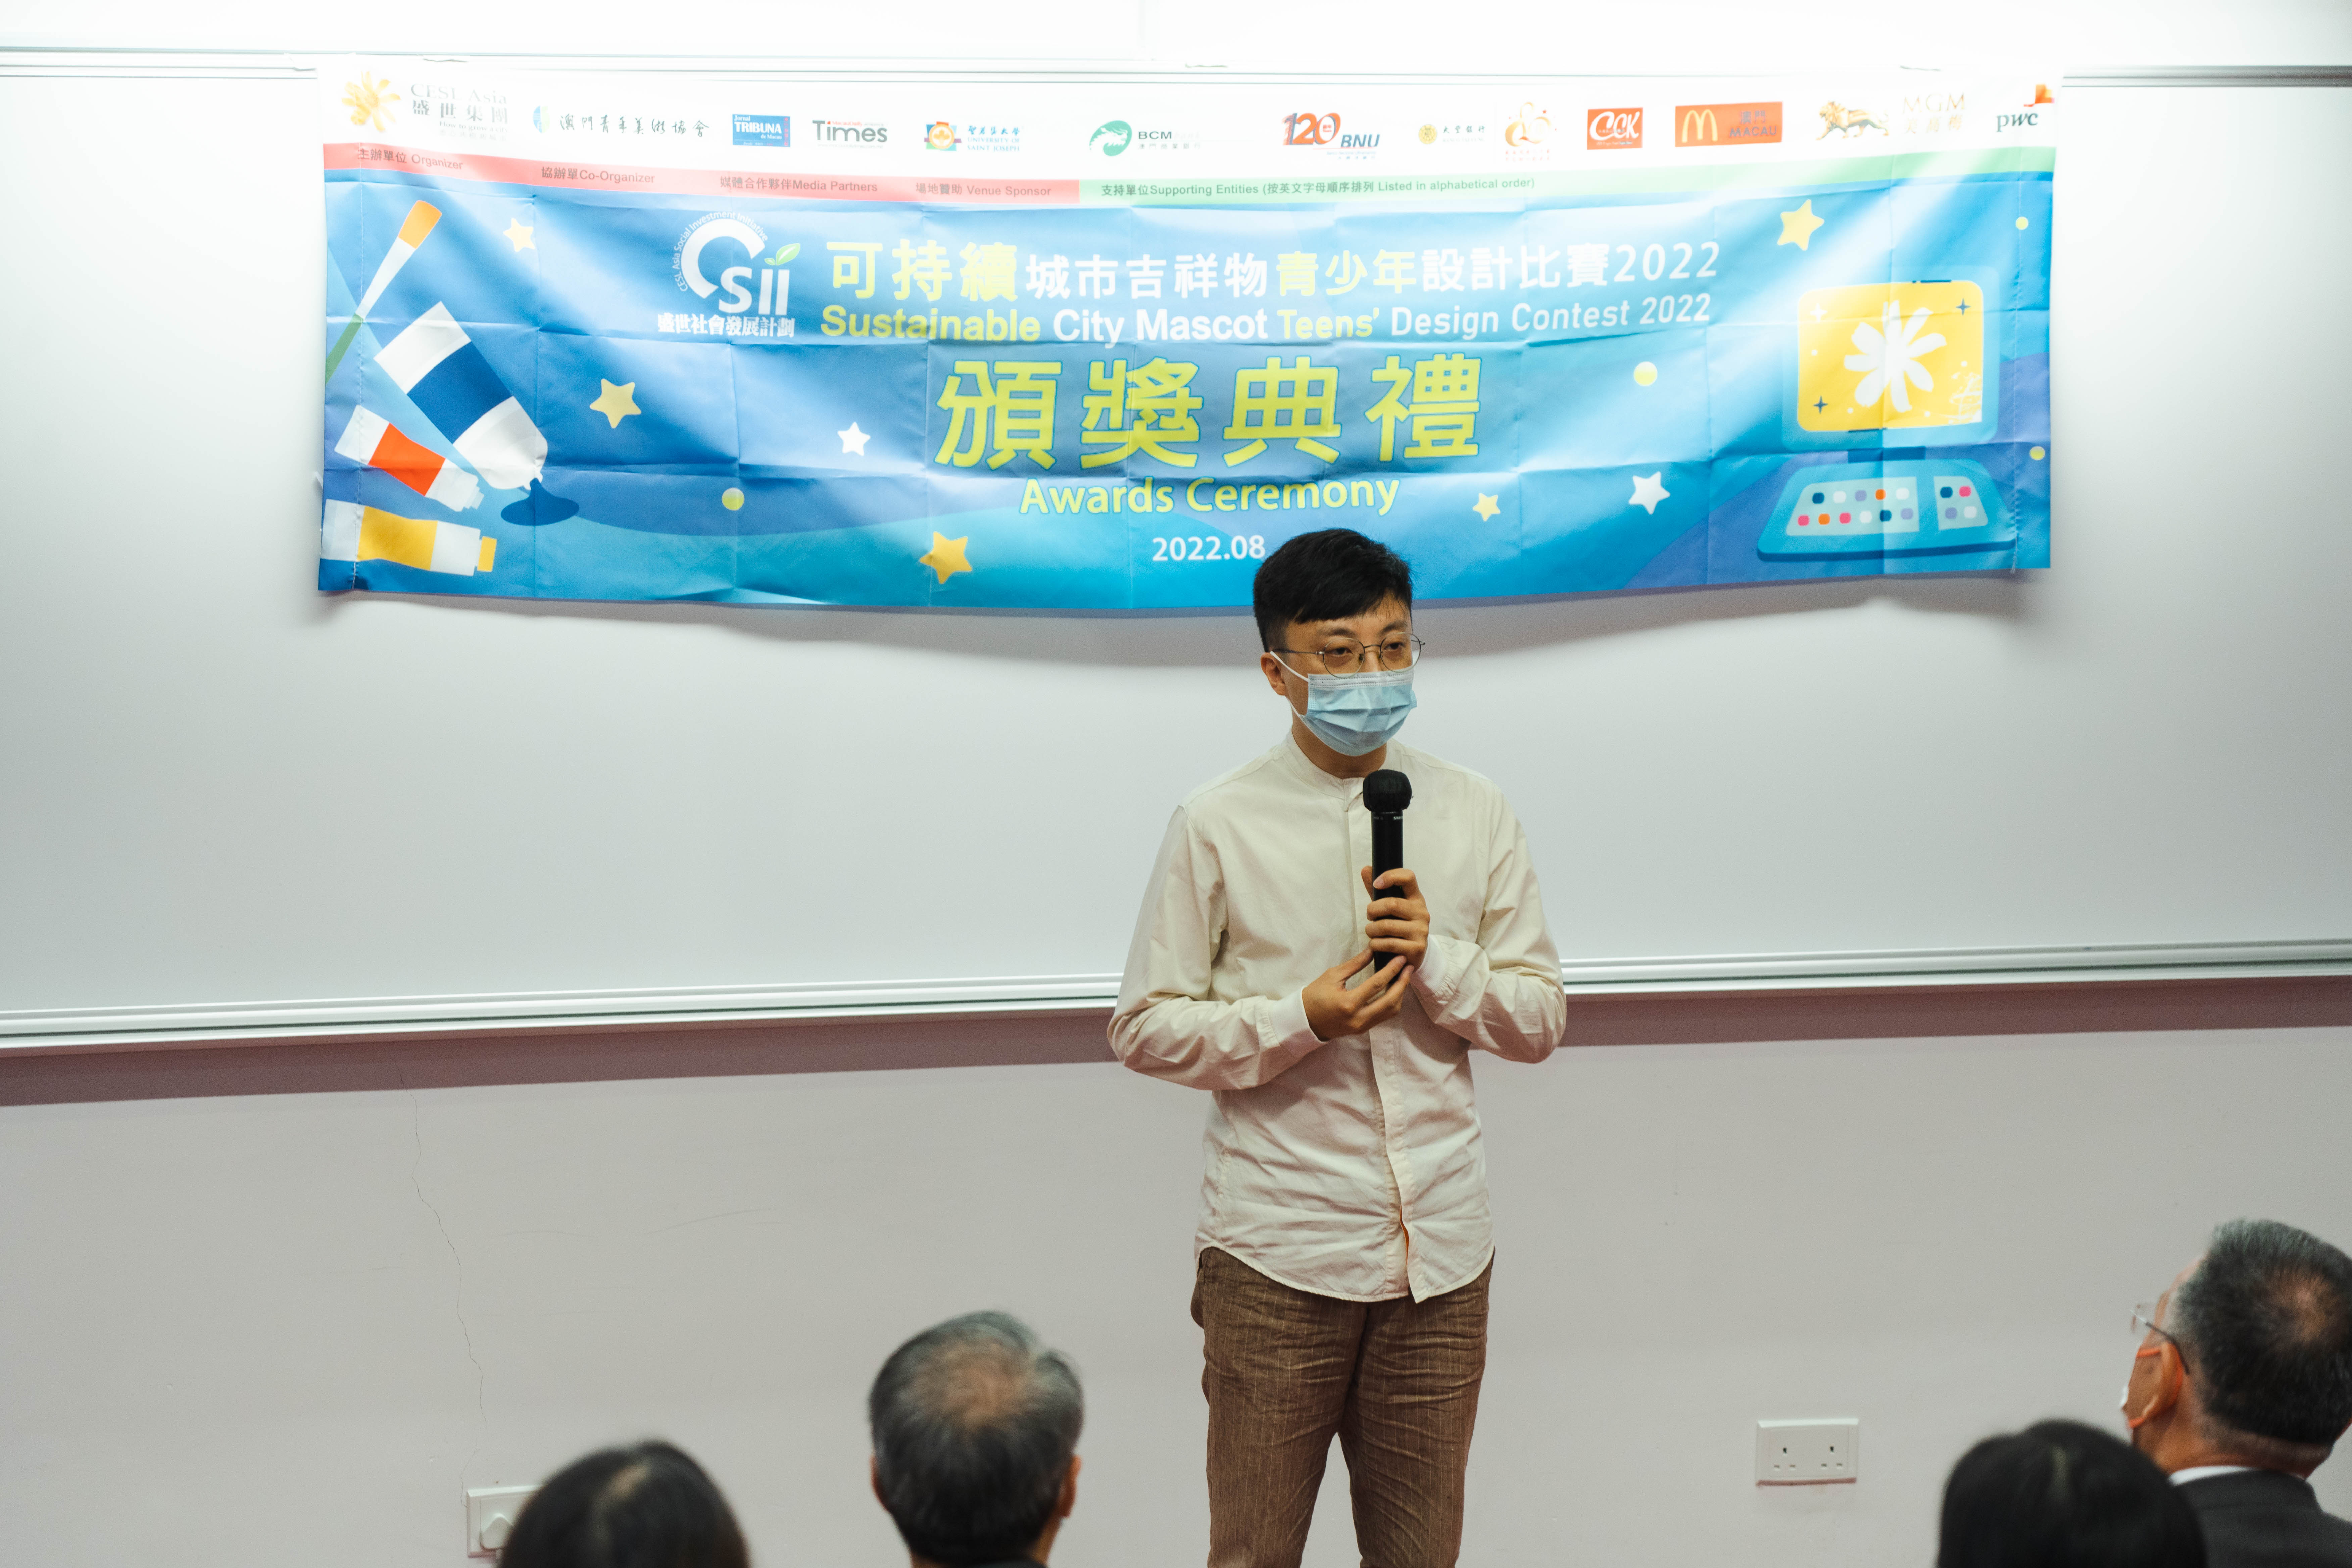 CESL Asia Social Investment Initiative Teen’s Design Contest 2022